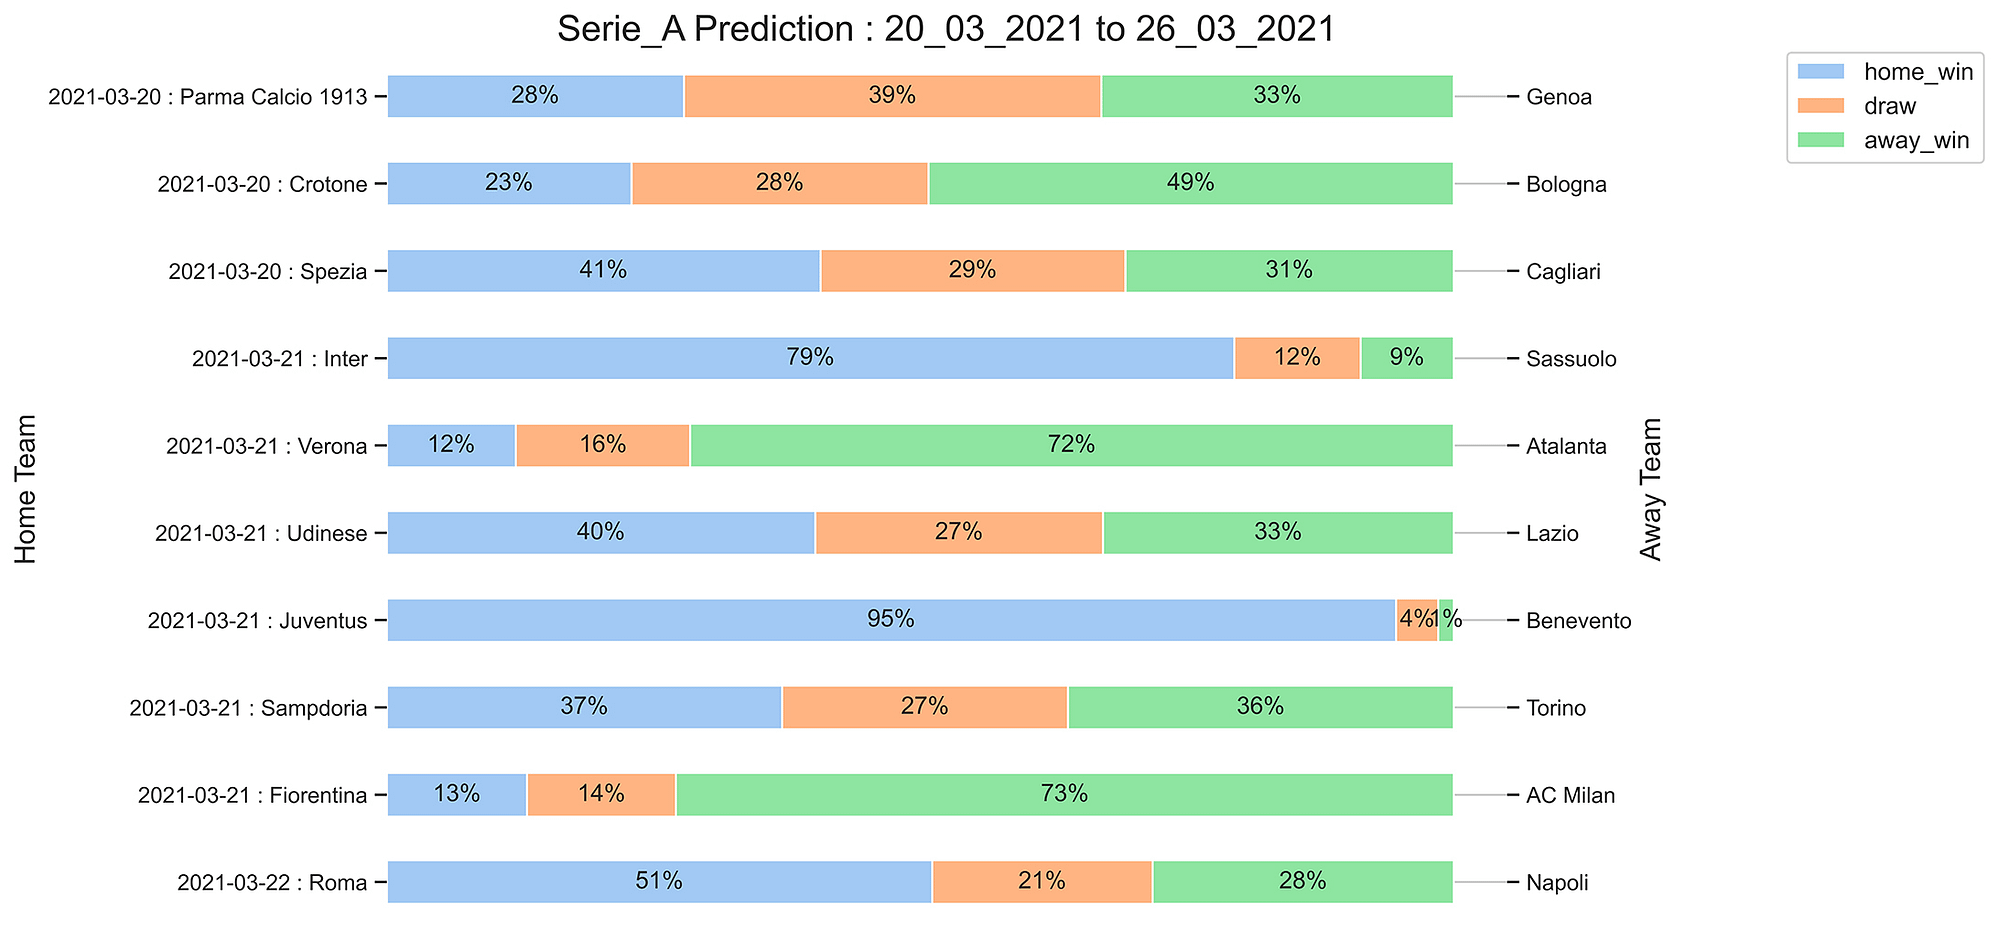 Serie_A_Prediction 20_03_2021